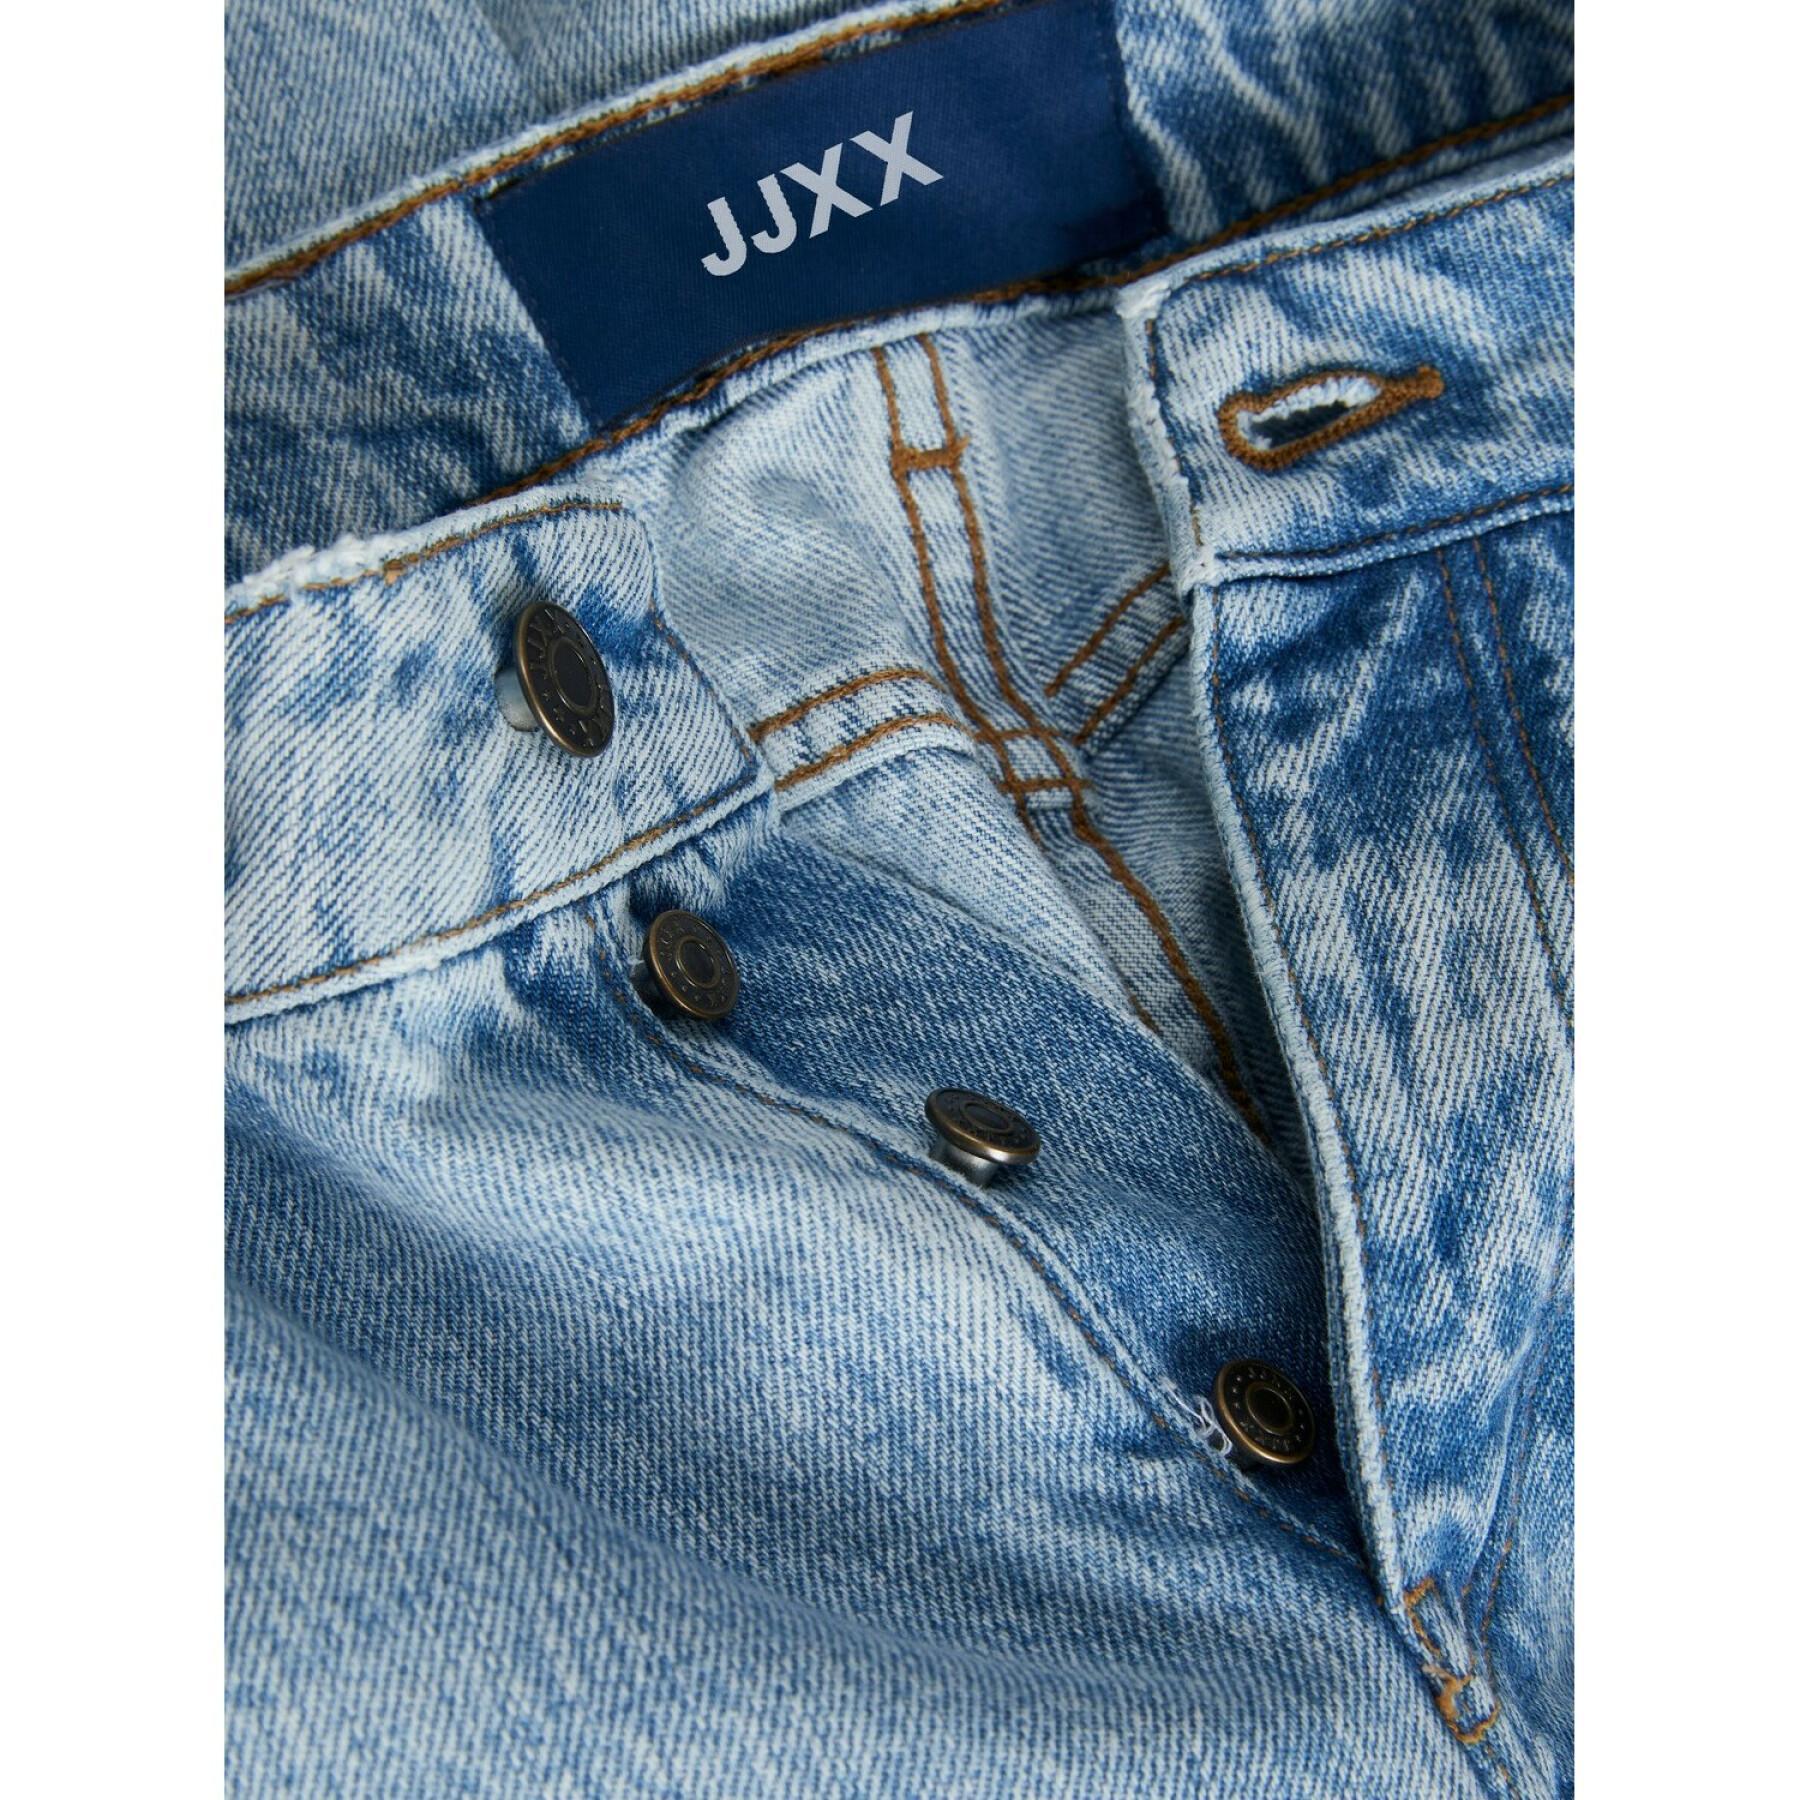 Women's straight jeans JJXX seoul cr3007